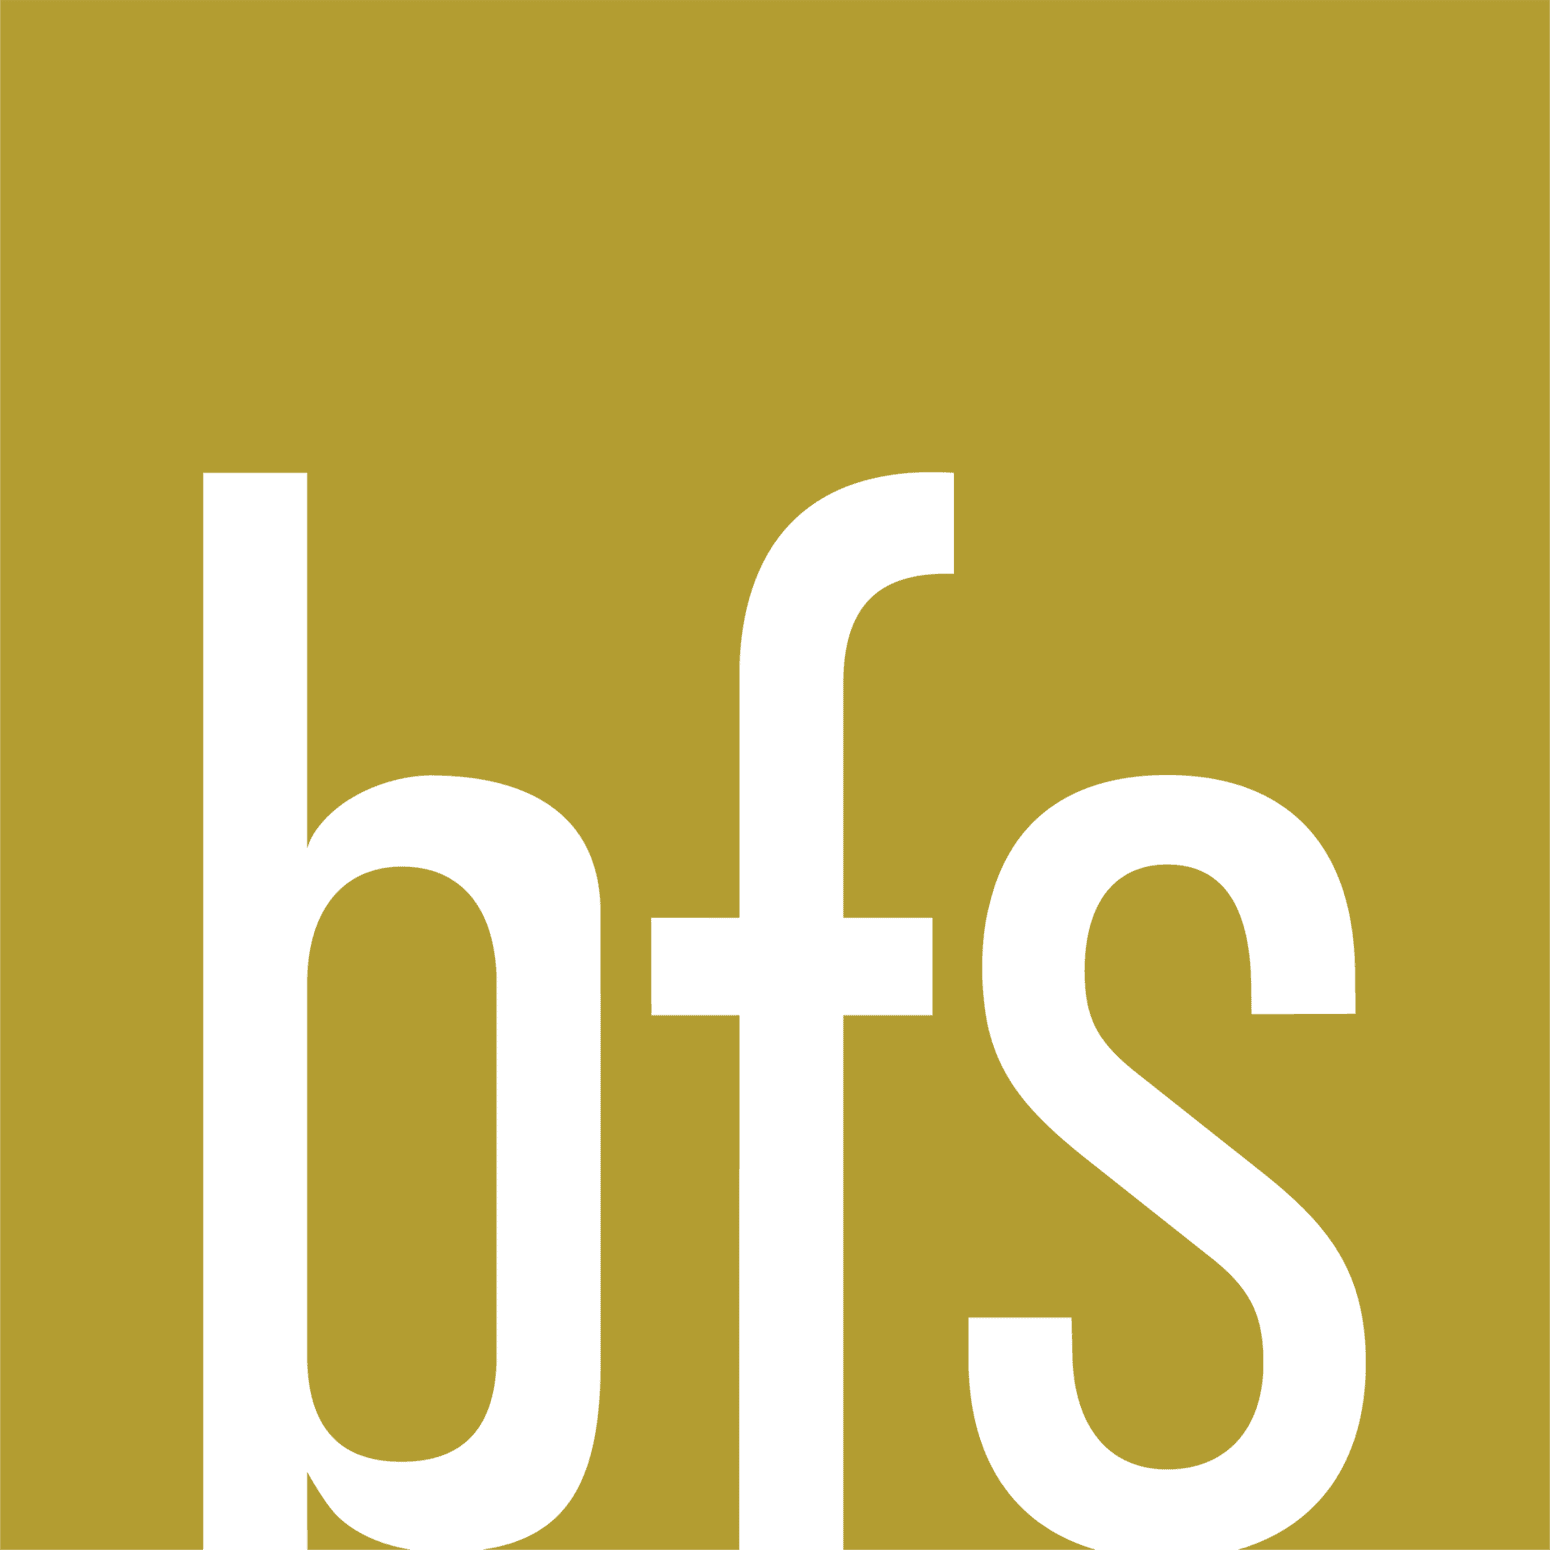 Bfs Landscape Architects Brandmark Full Color